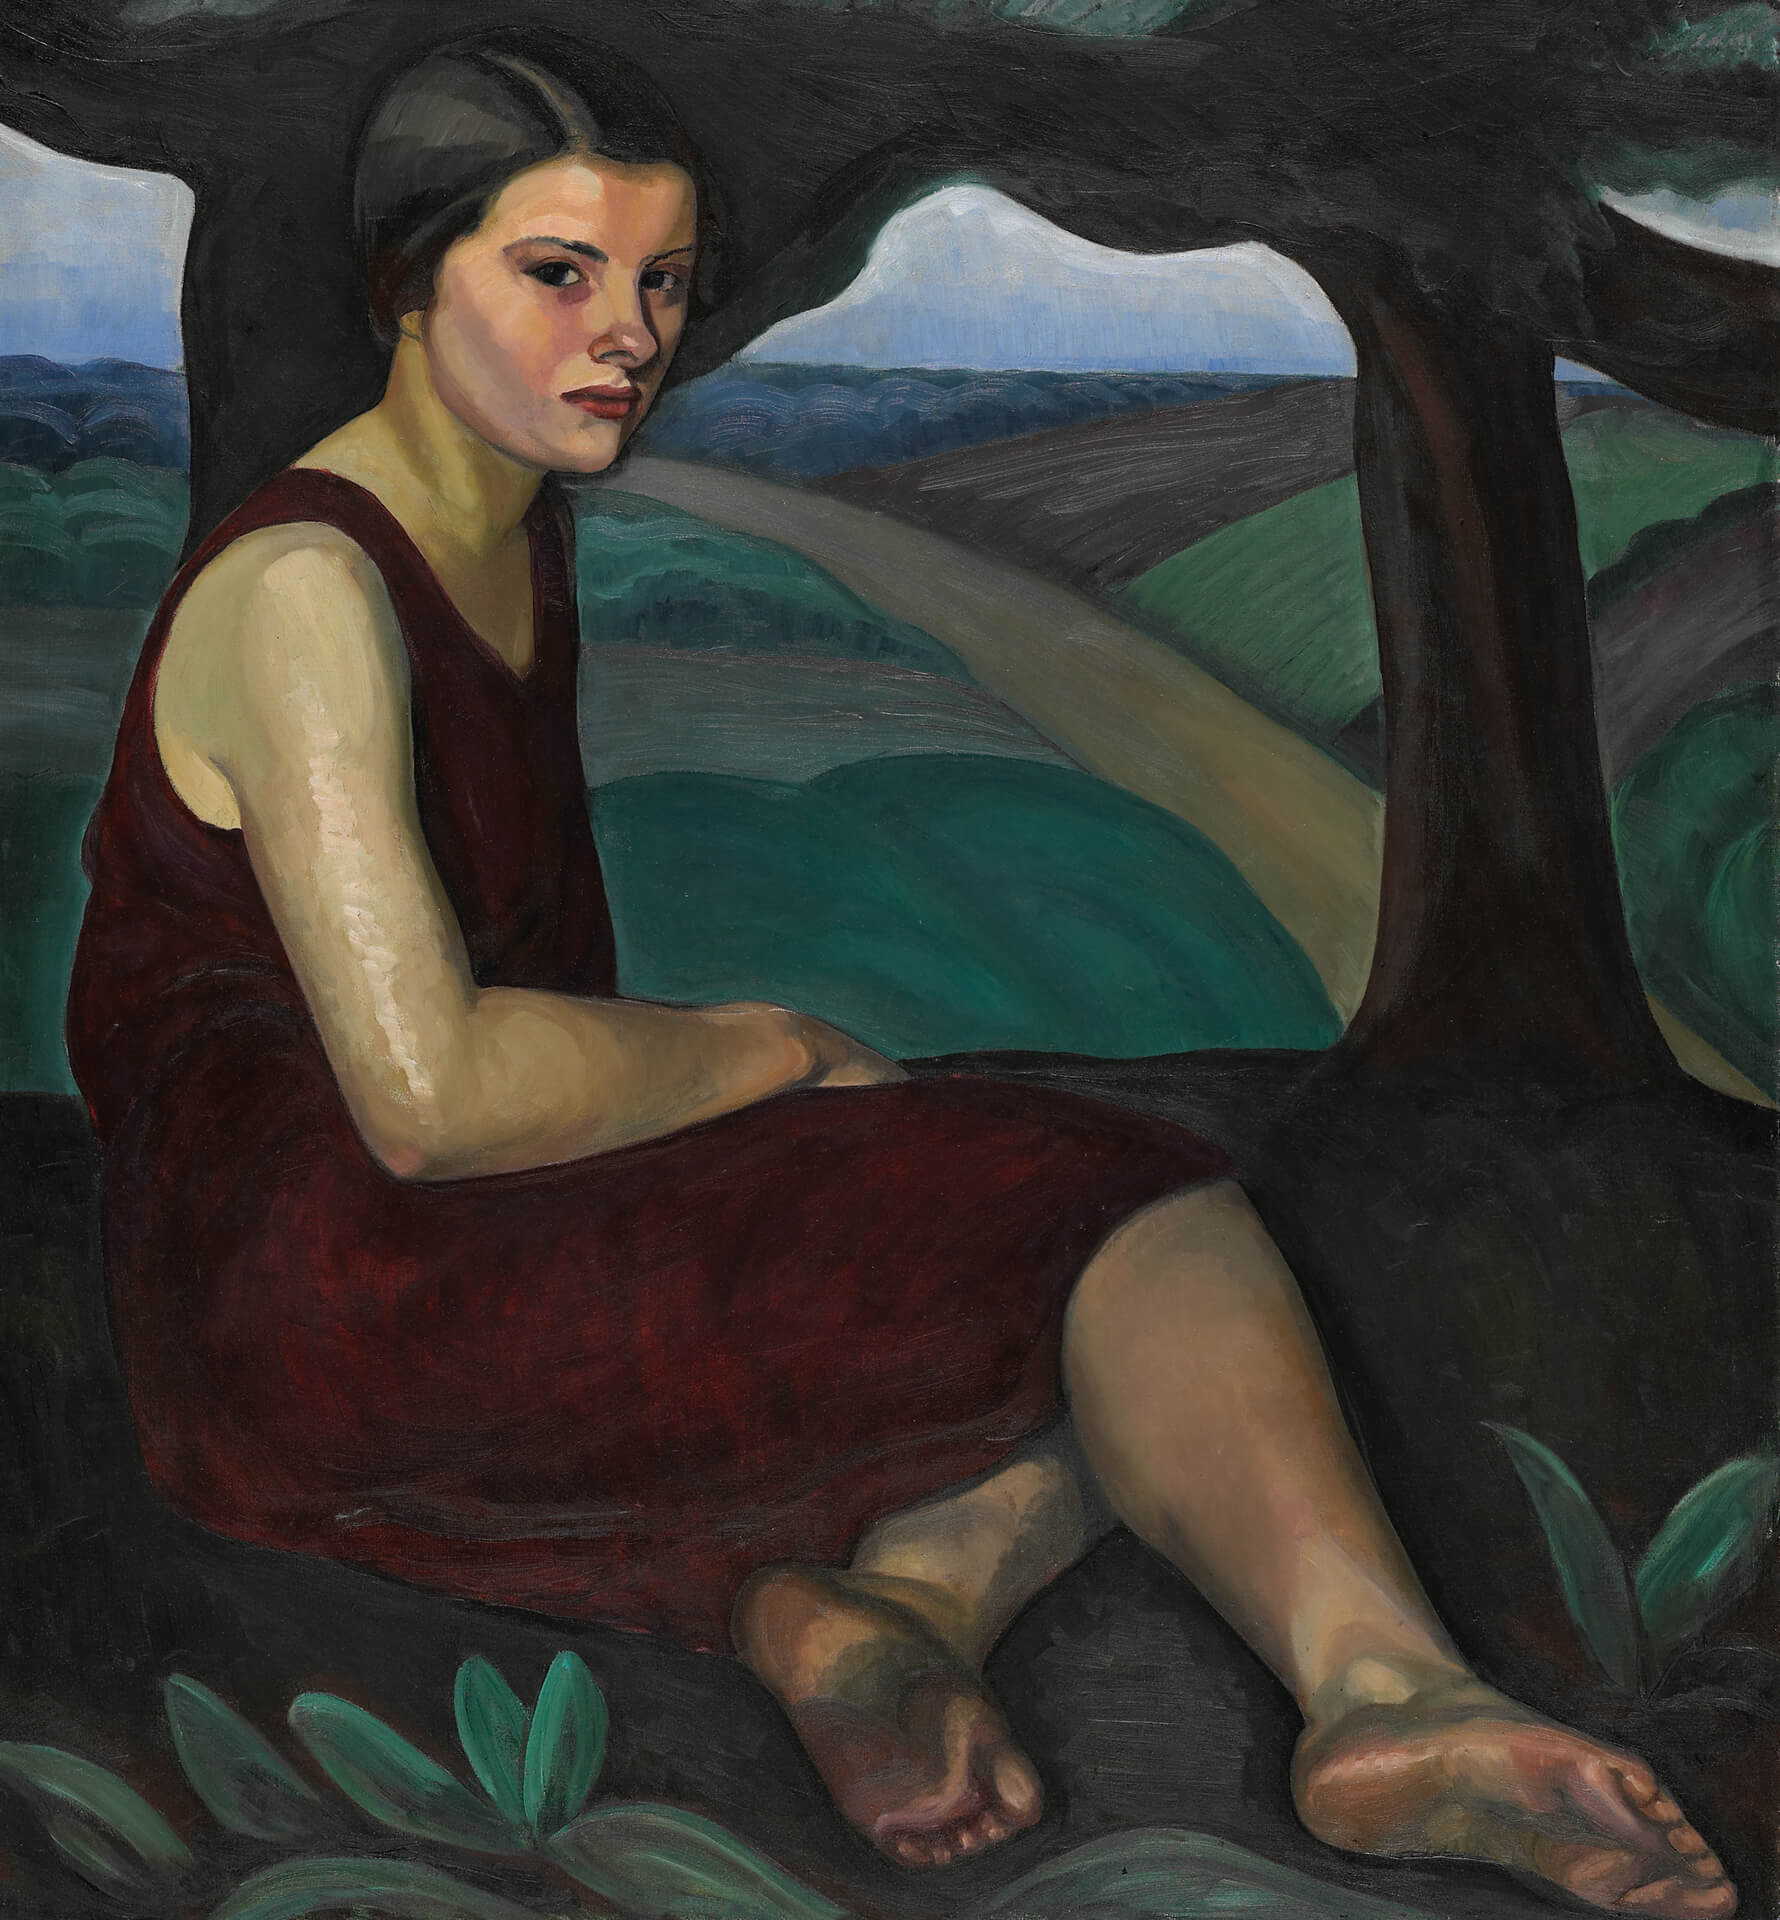 Prudence Heward, Femme sur une colline, 1928